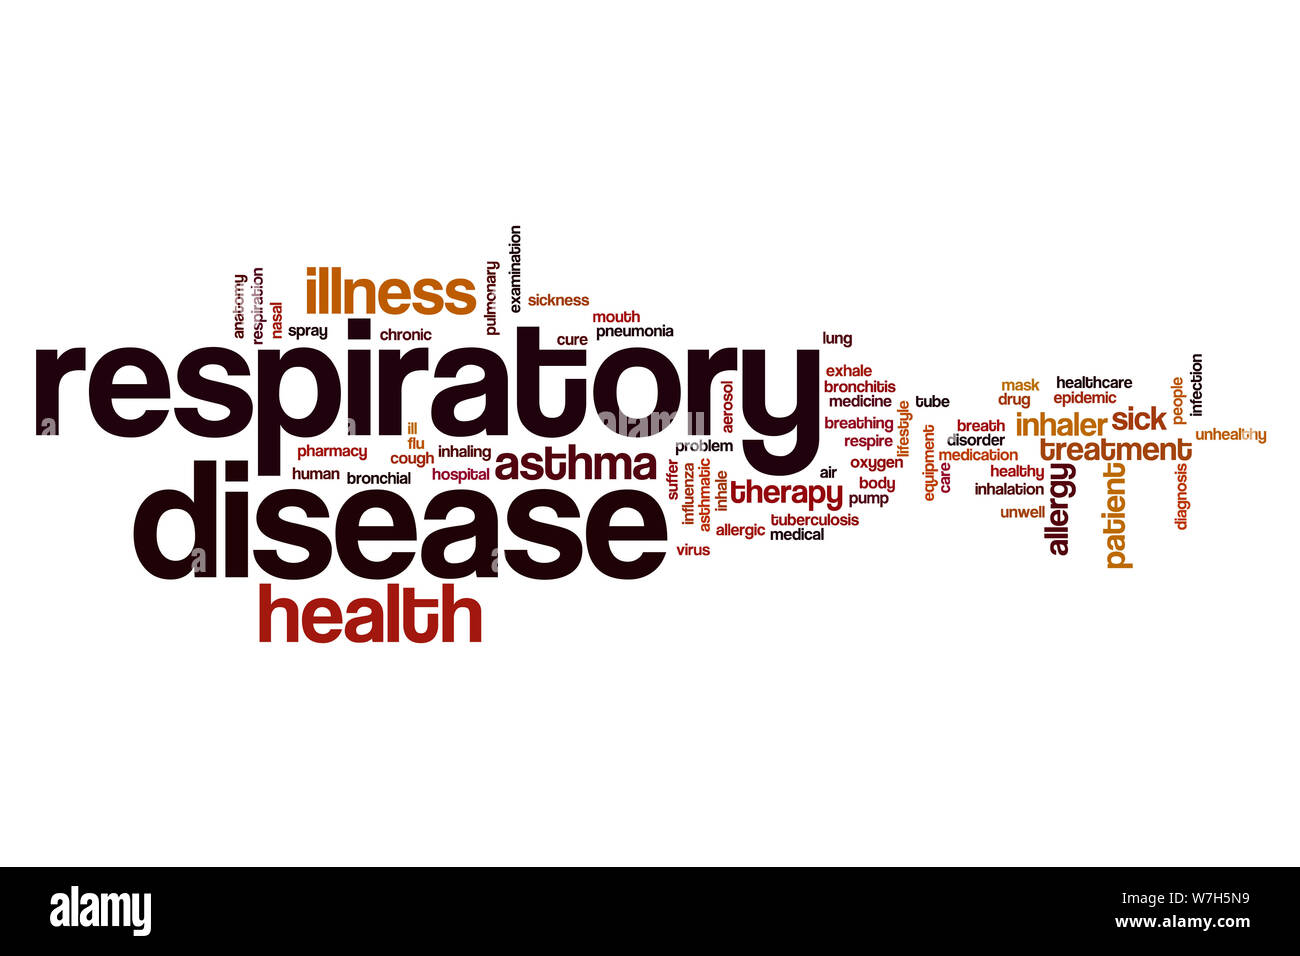 Respiratory disease word cloud concept Stock Photo